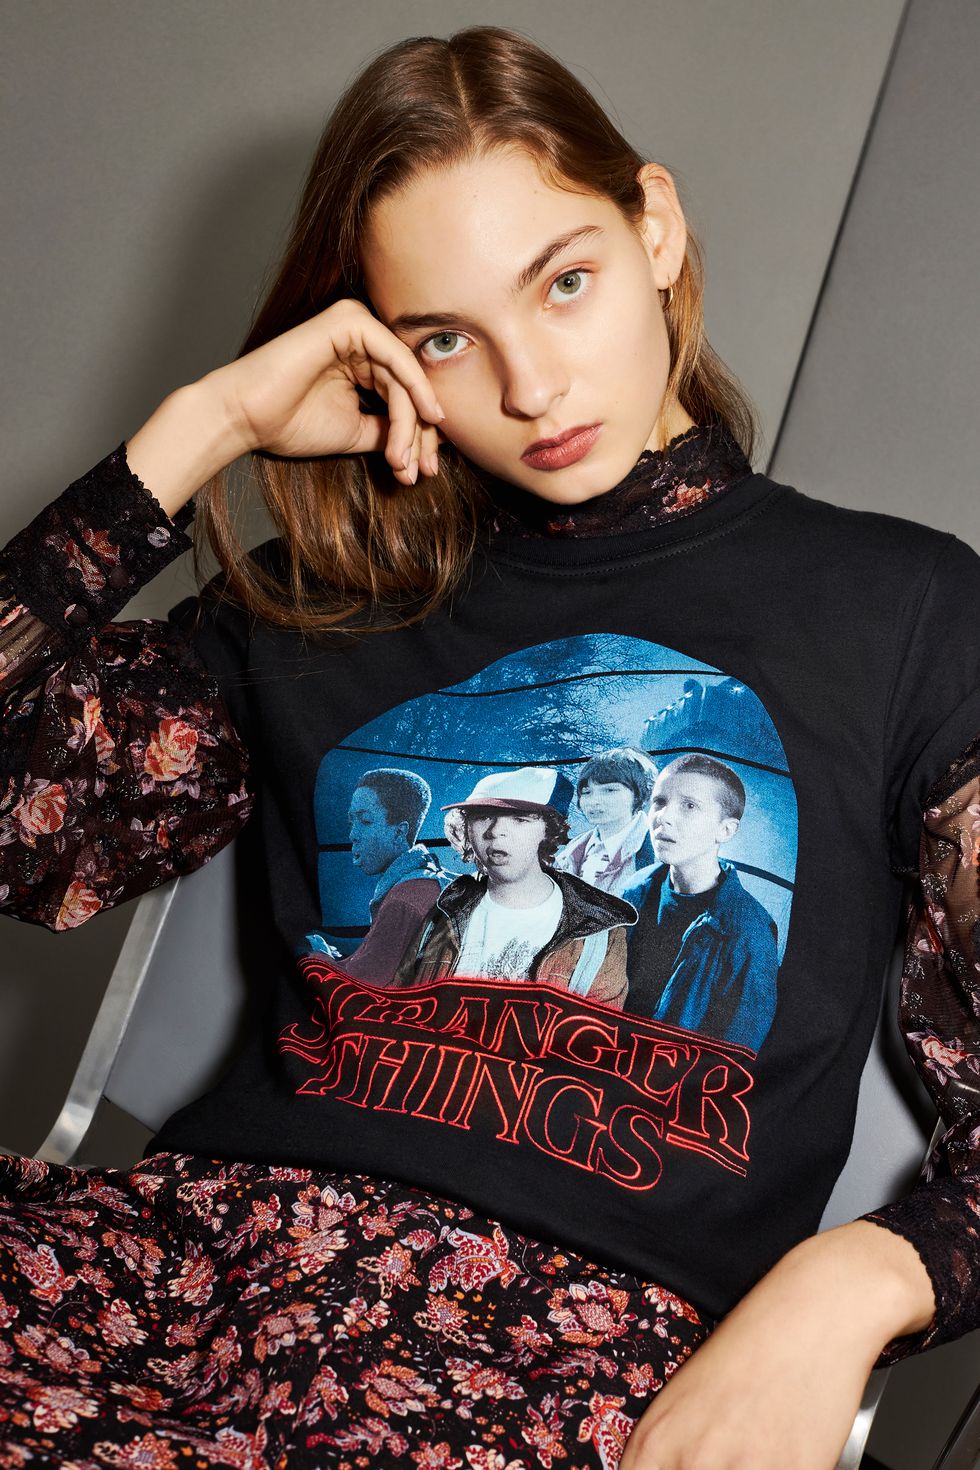 Louis Vuitton Just Sent a 'Stranger Things' T-Shirt Down the